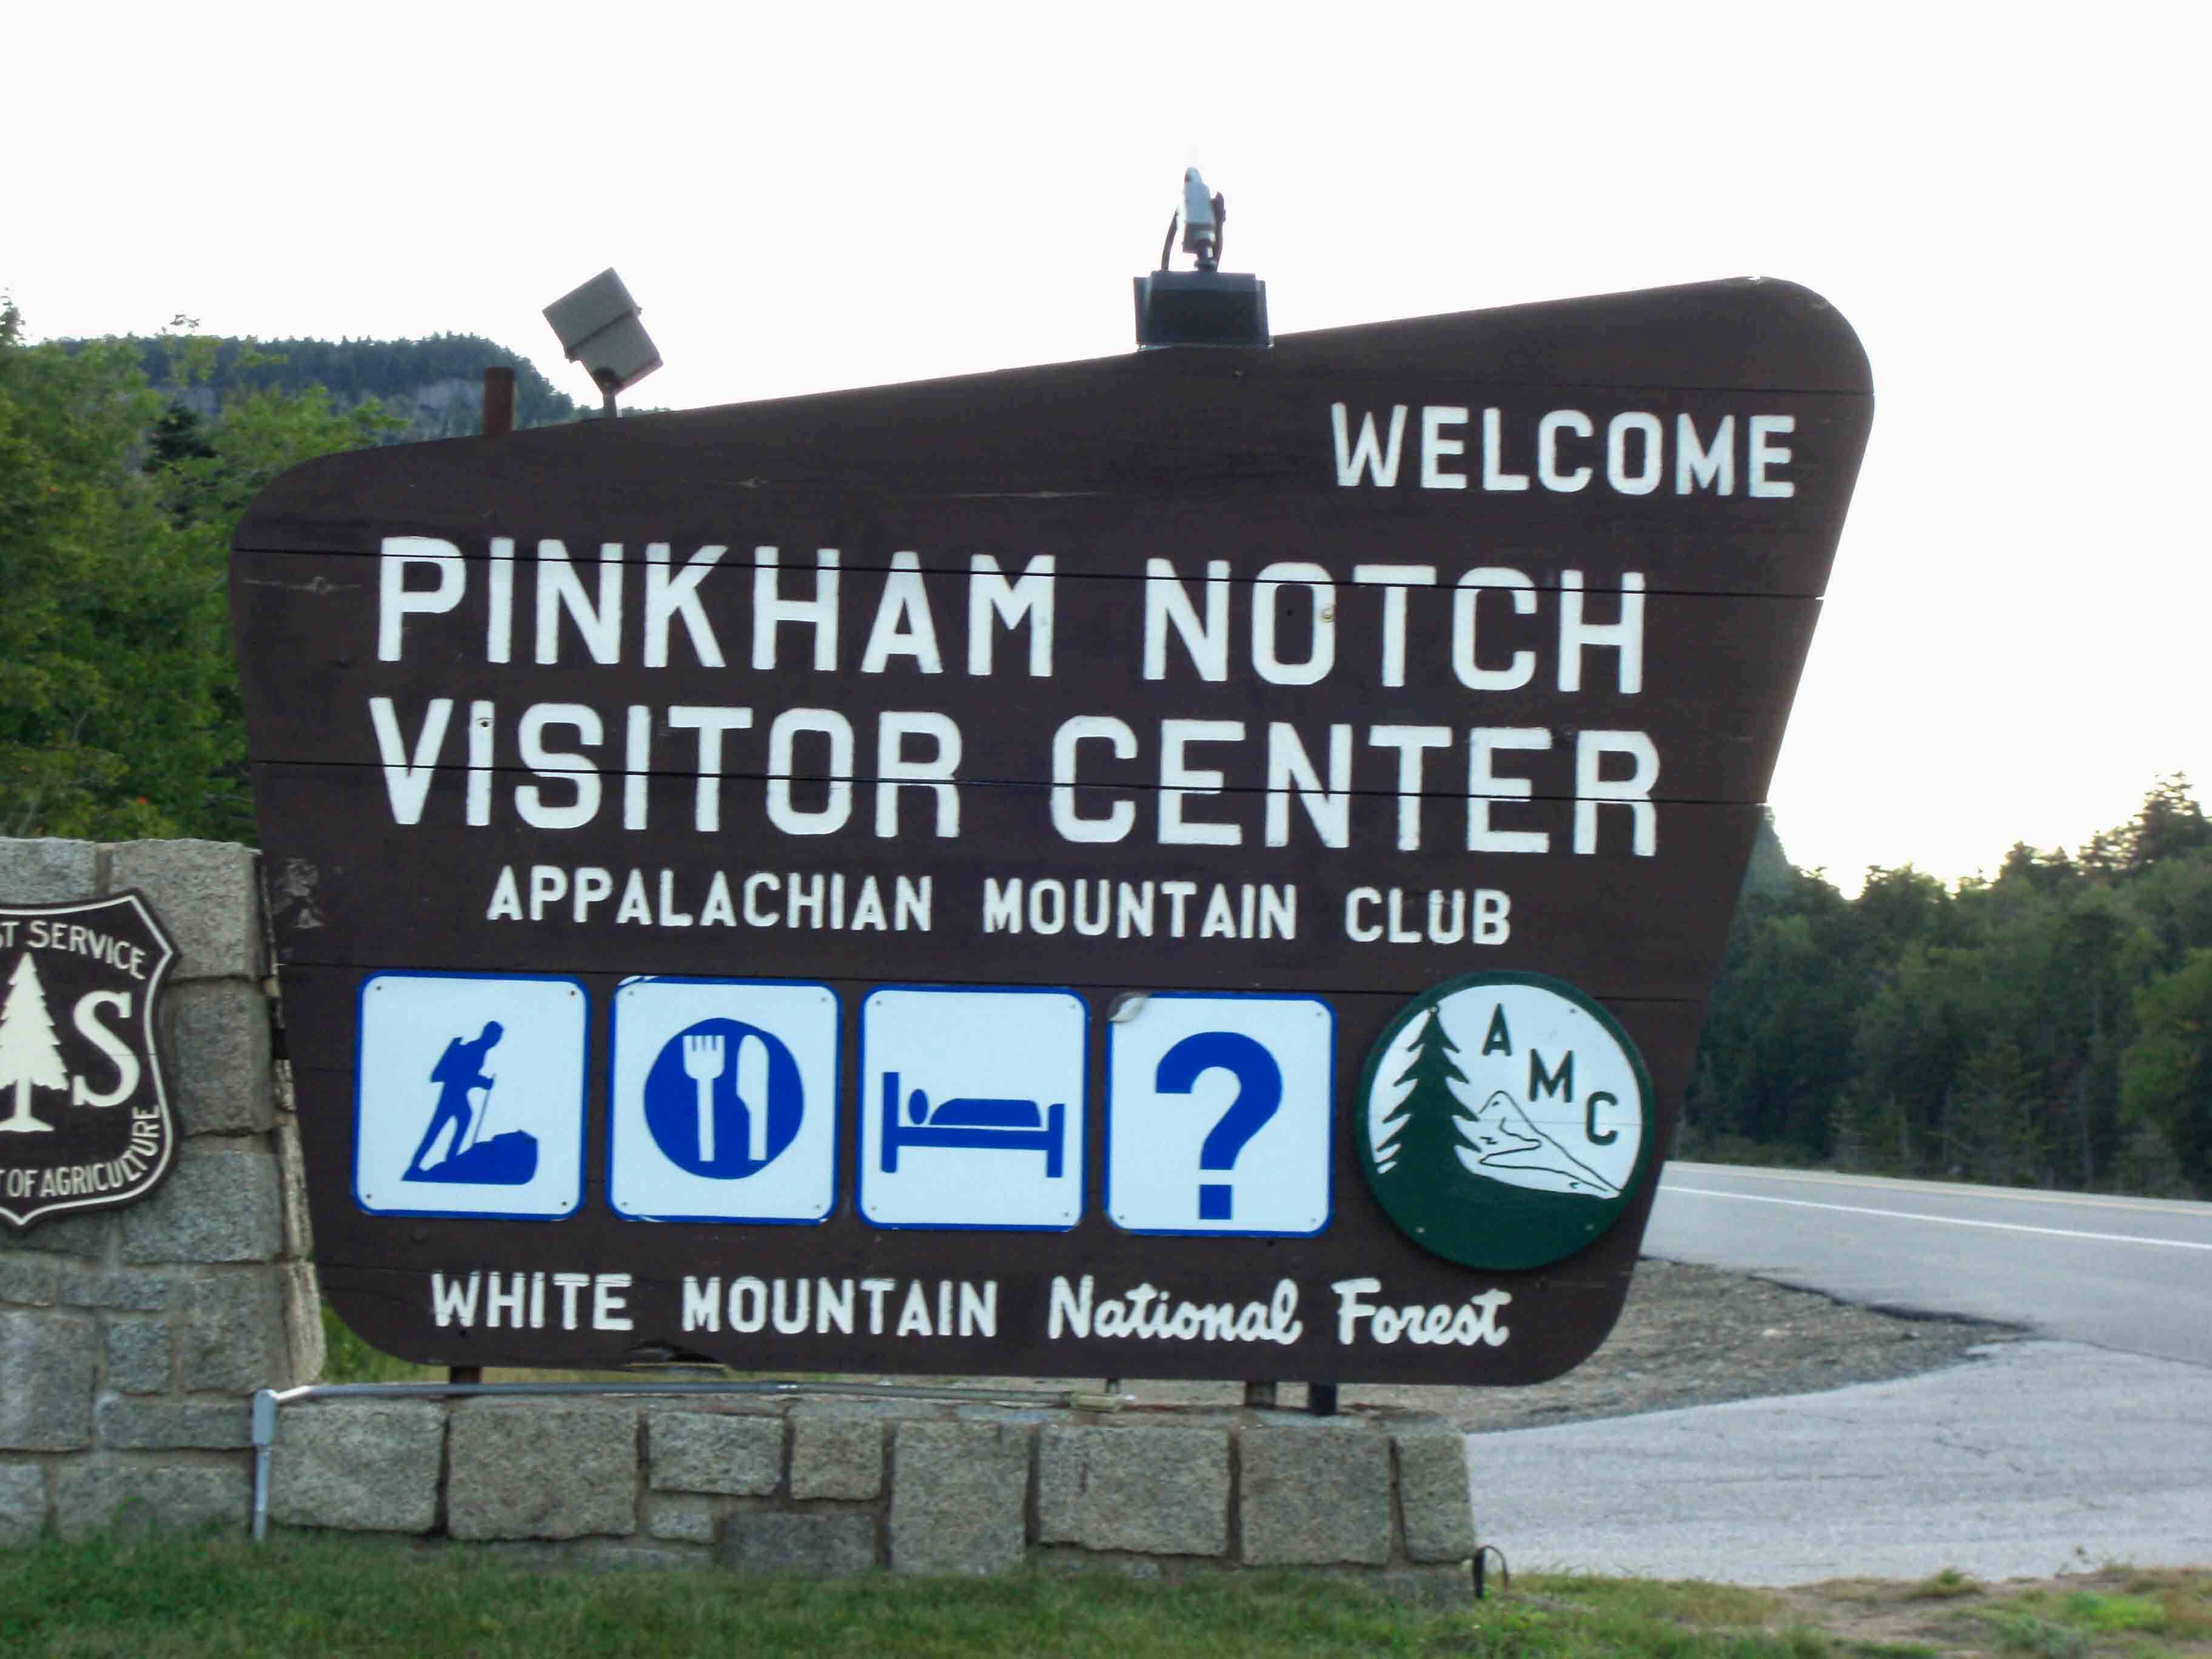 MM 0.0 - Entrance to the Appalachian Mountain Club Visitor Center at Pinkham Notch on NH 16.  Courtesy seqatt.net@sbcglobal.net